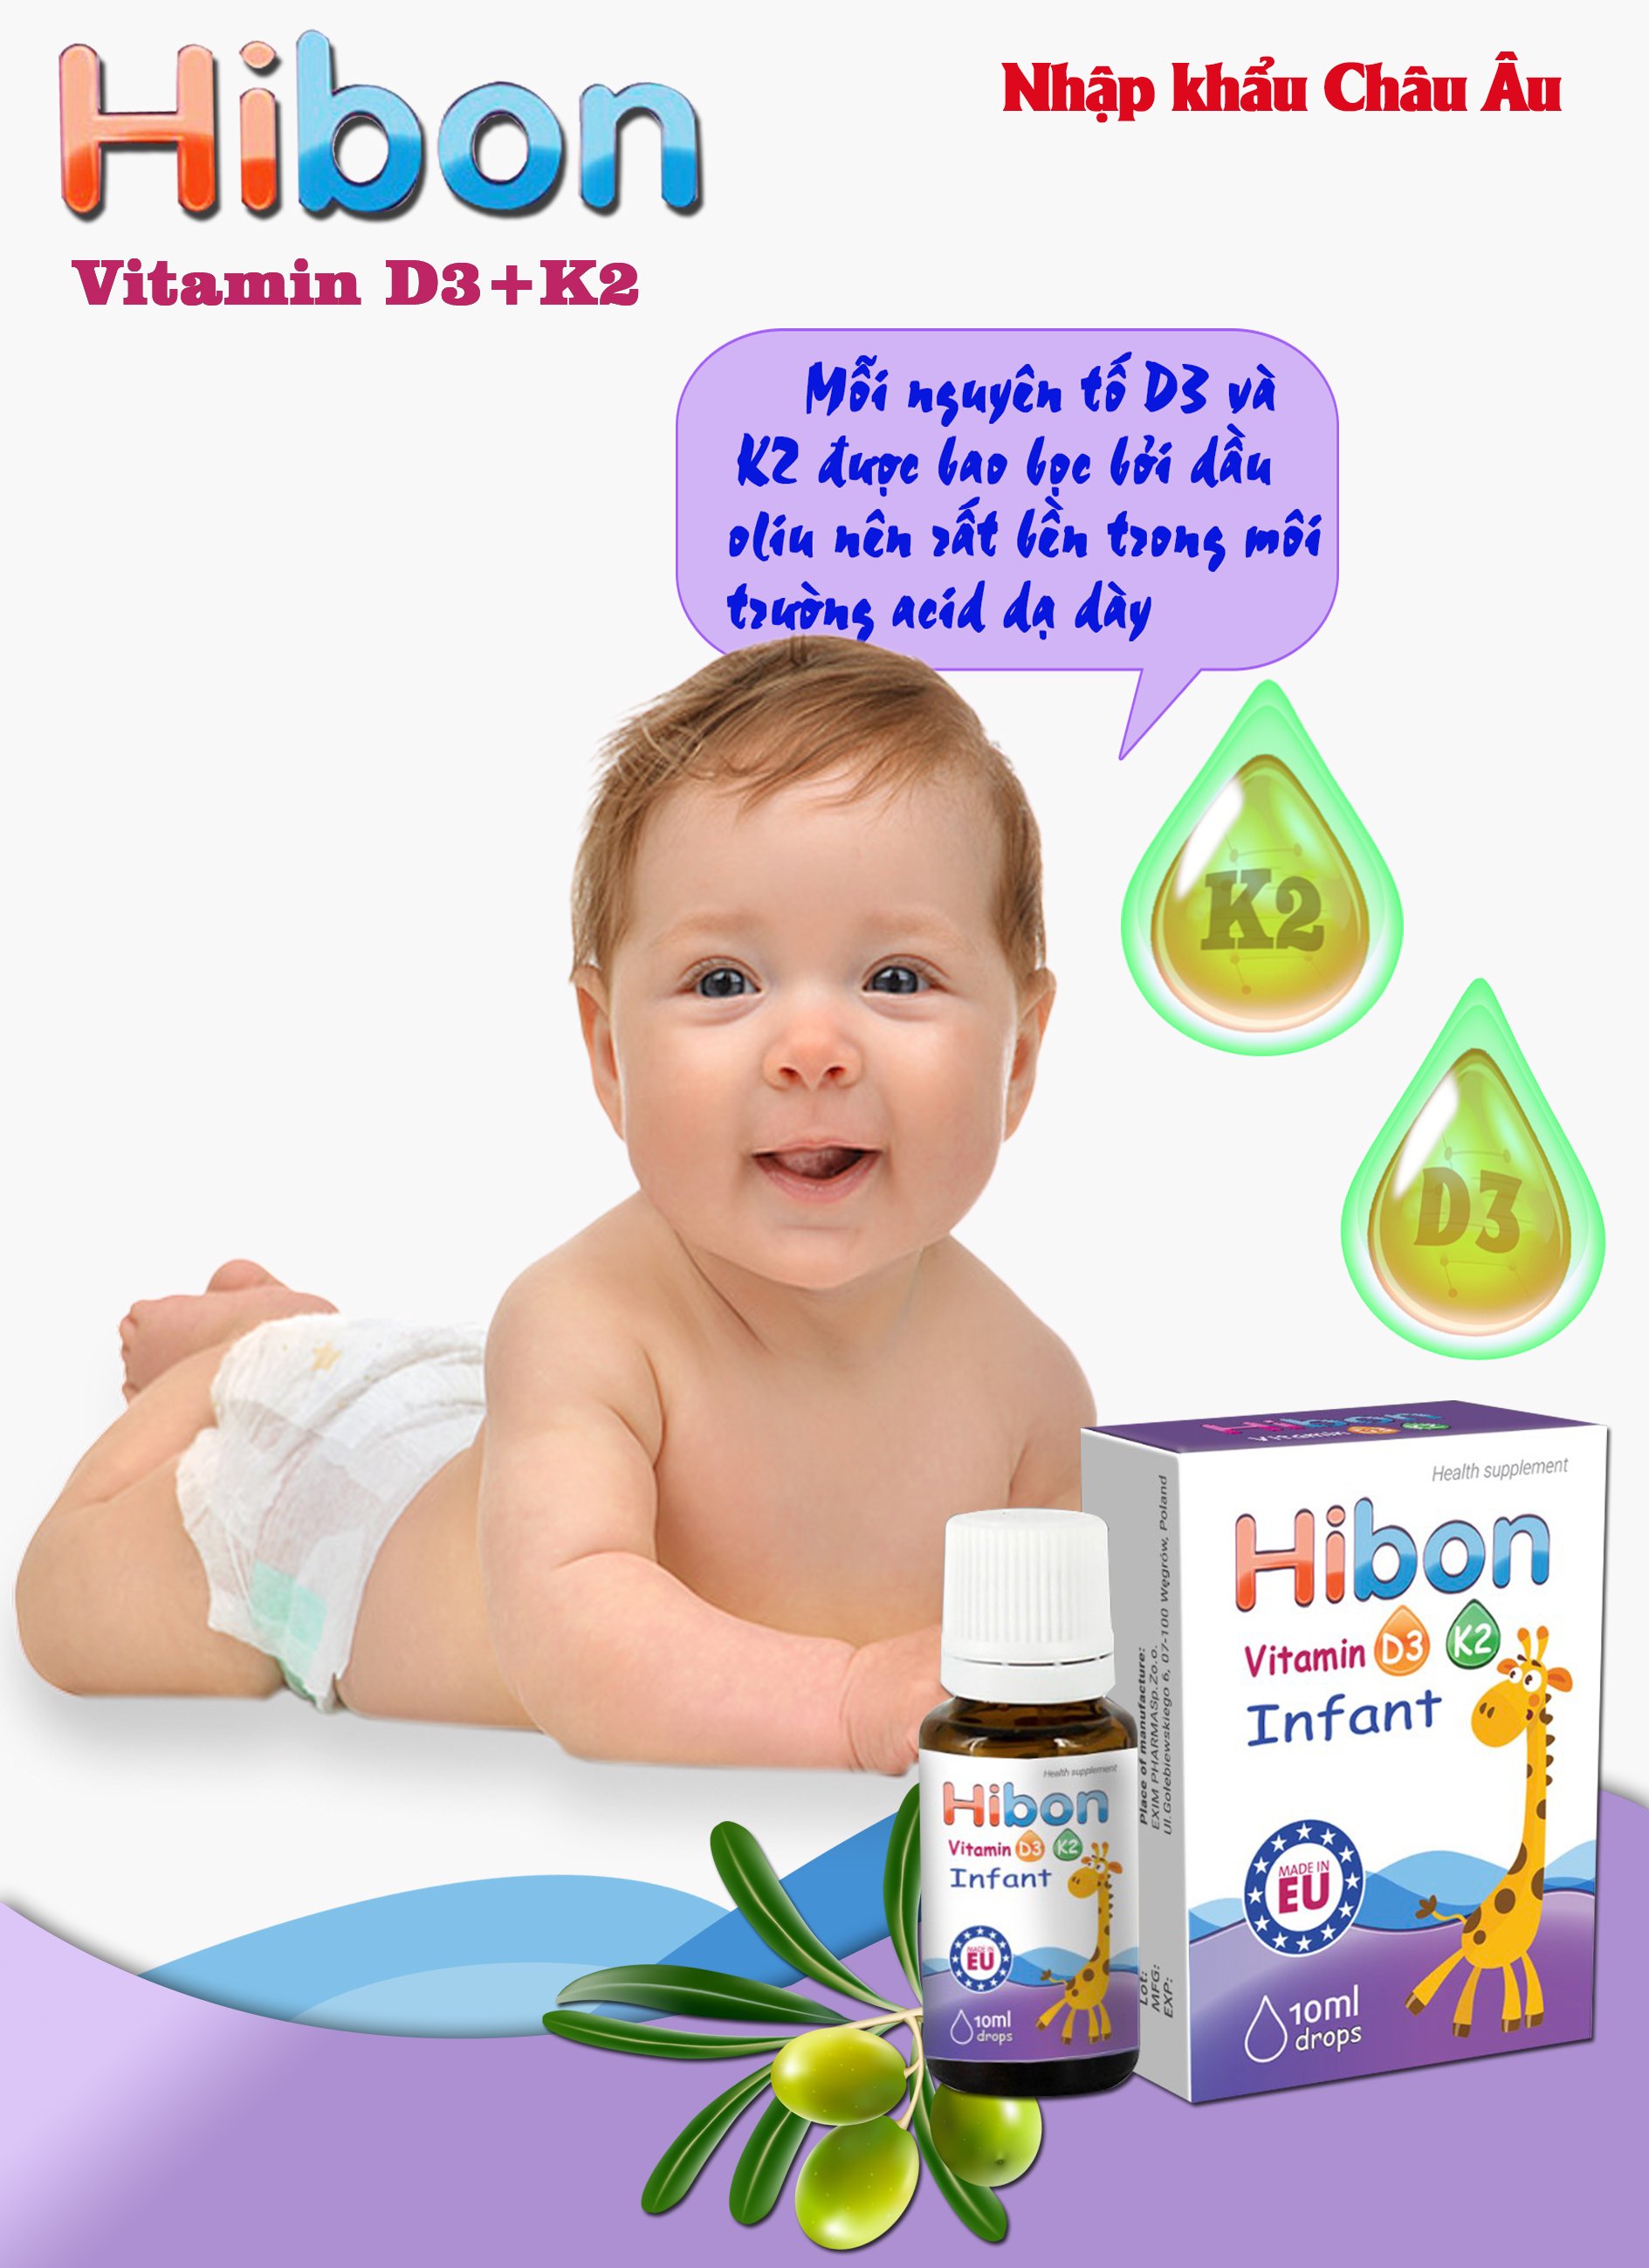 Hibon vitamin D3K2